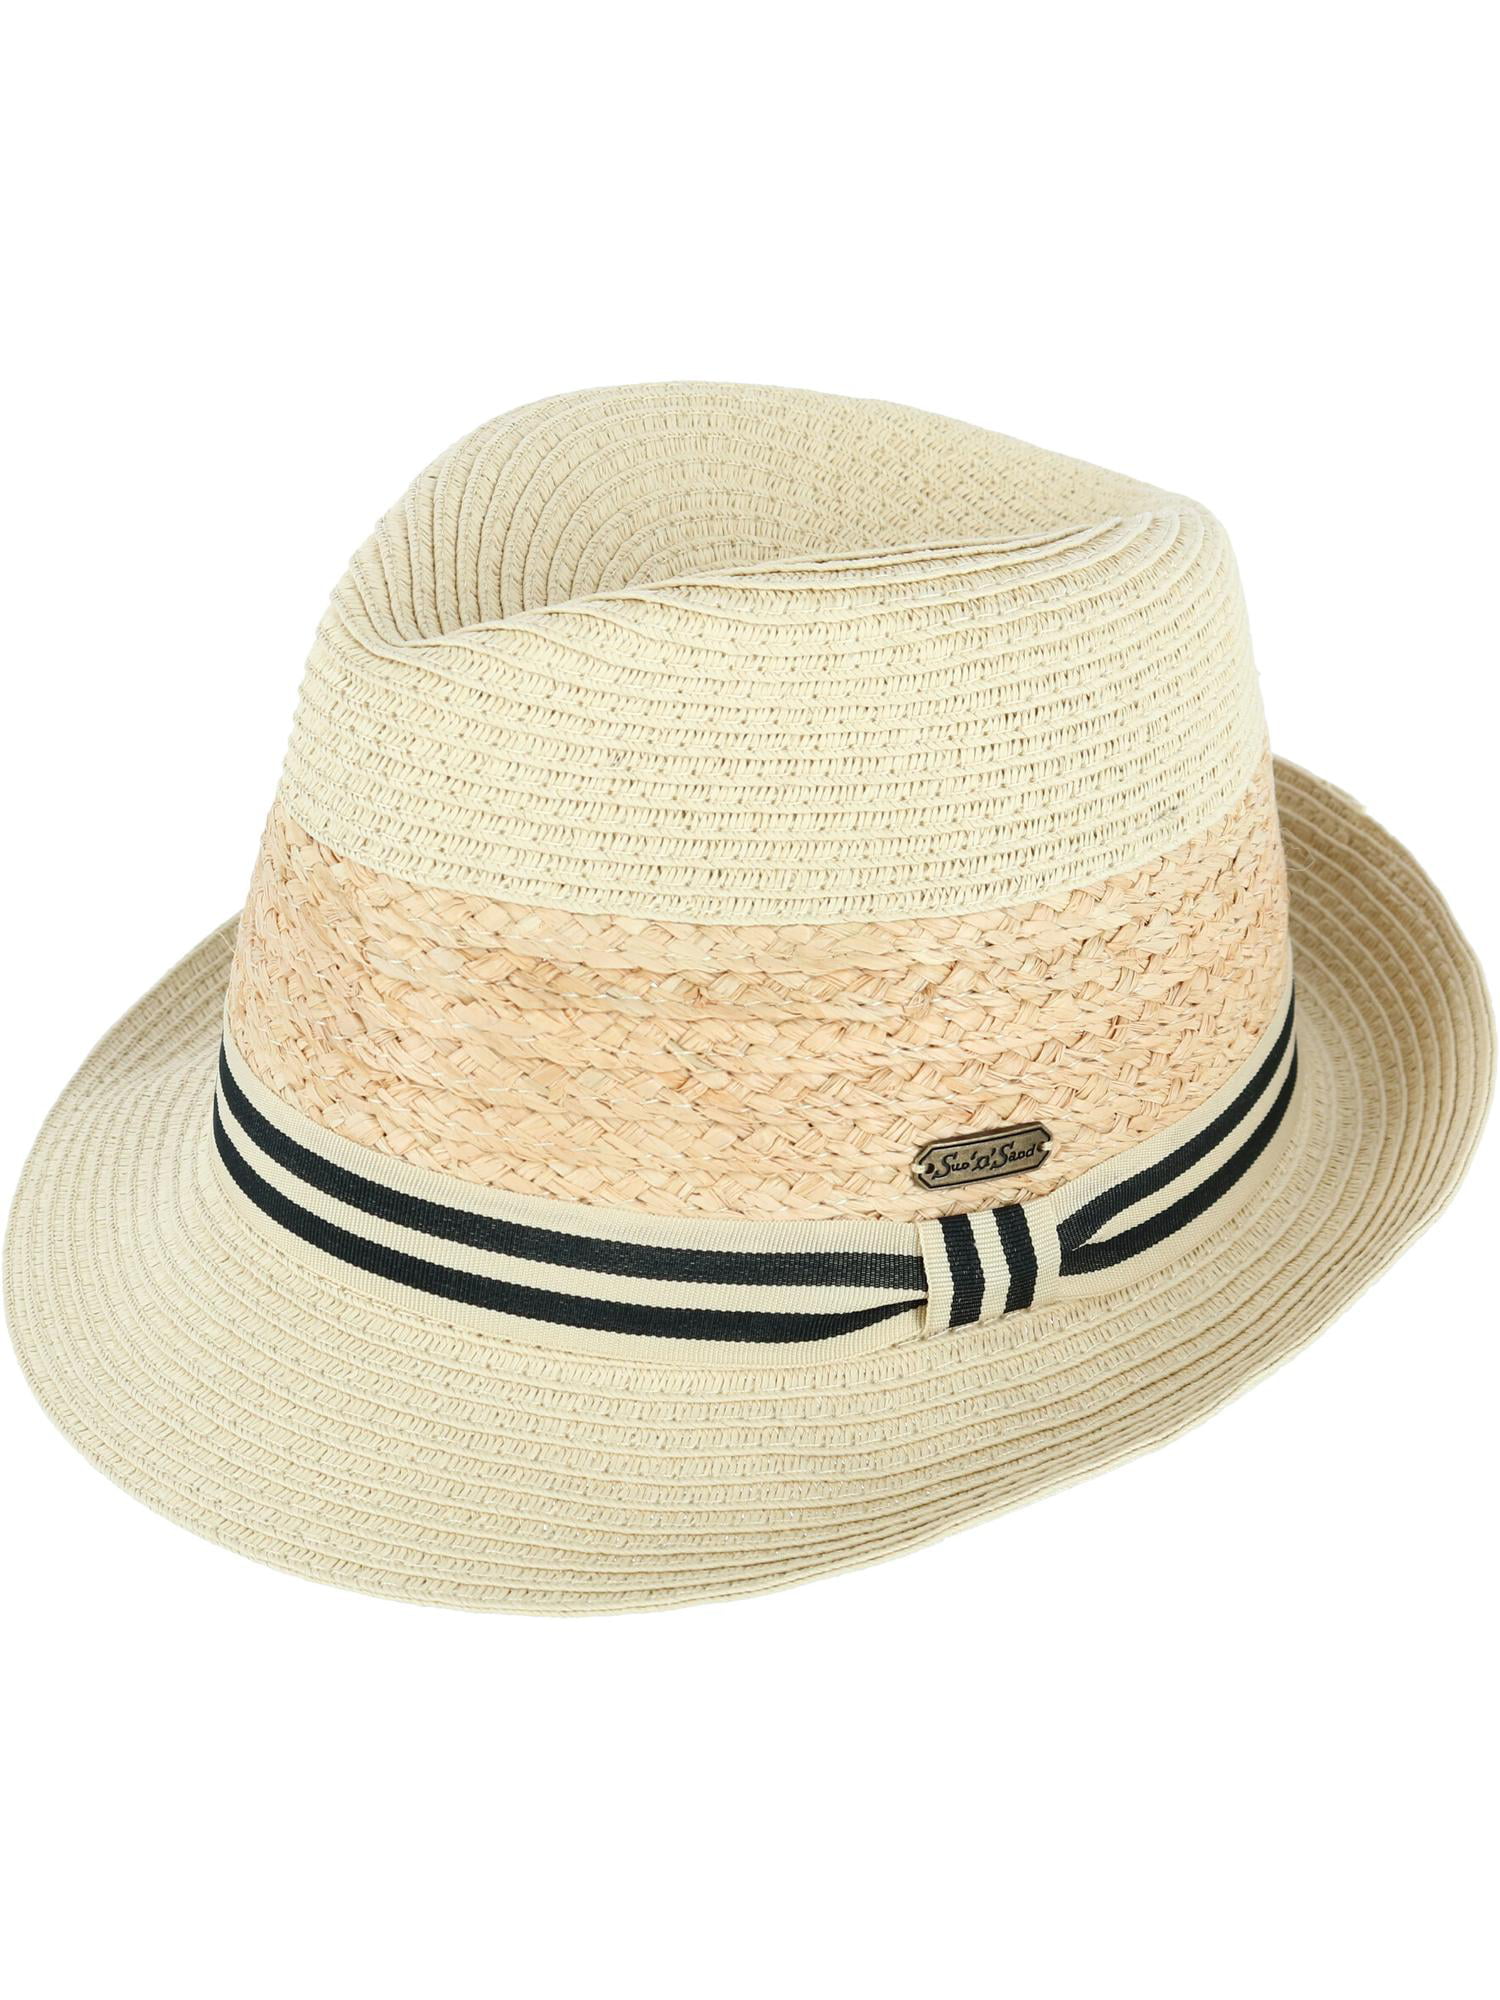 New Sun N Sand Women's Paper Straw Fedora with Striped Hatband 